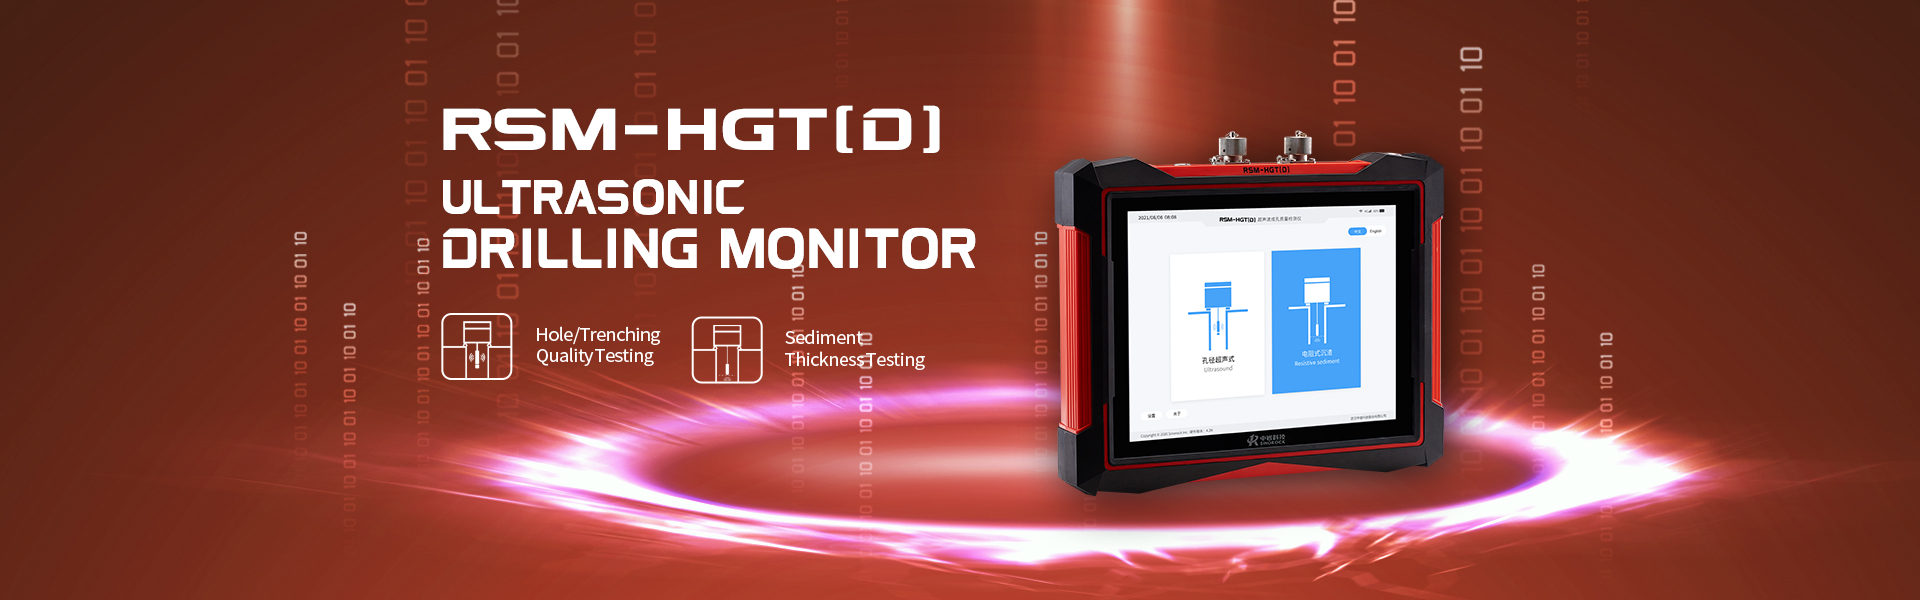 RSM-HGT(D) Ultrasonic Drilling Monitor